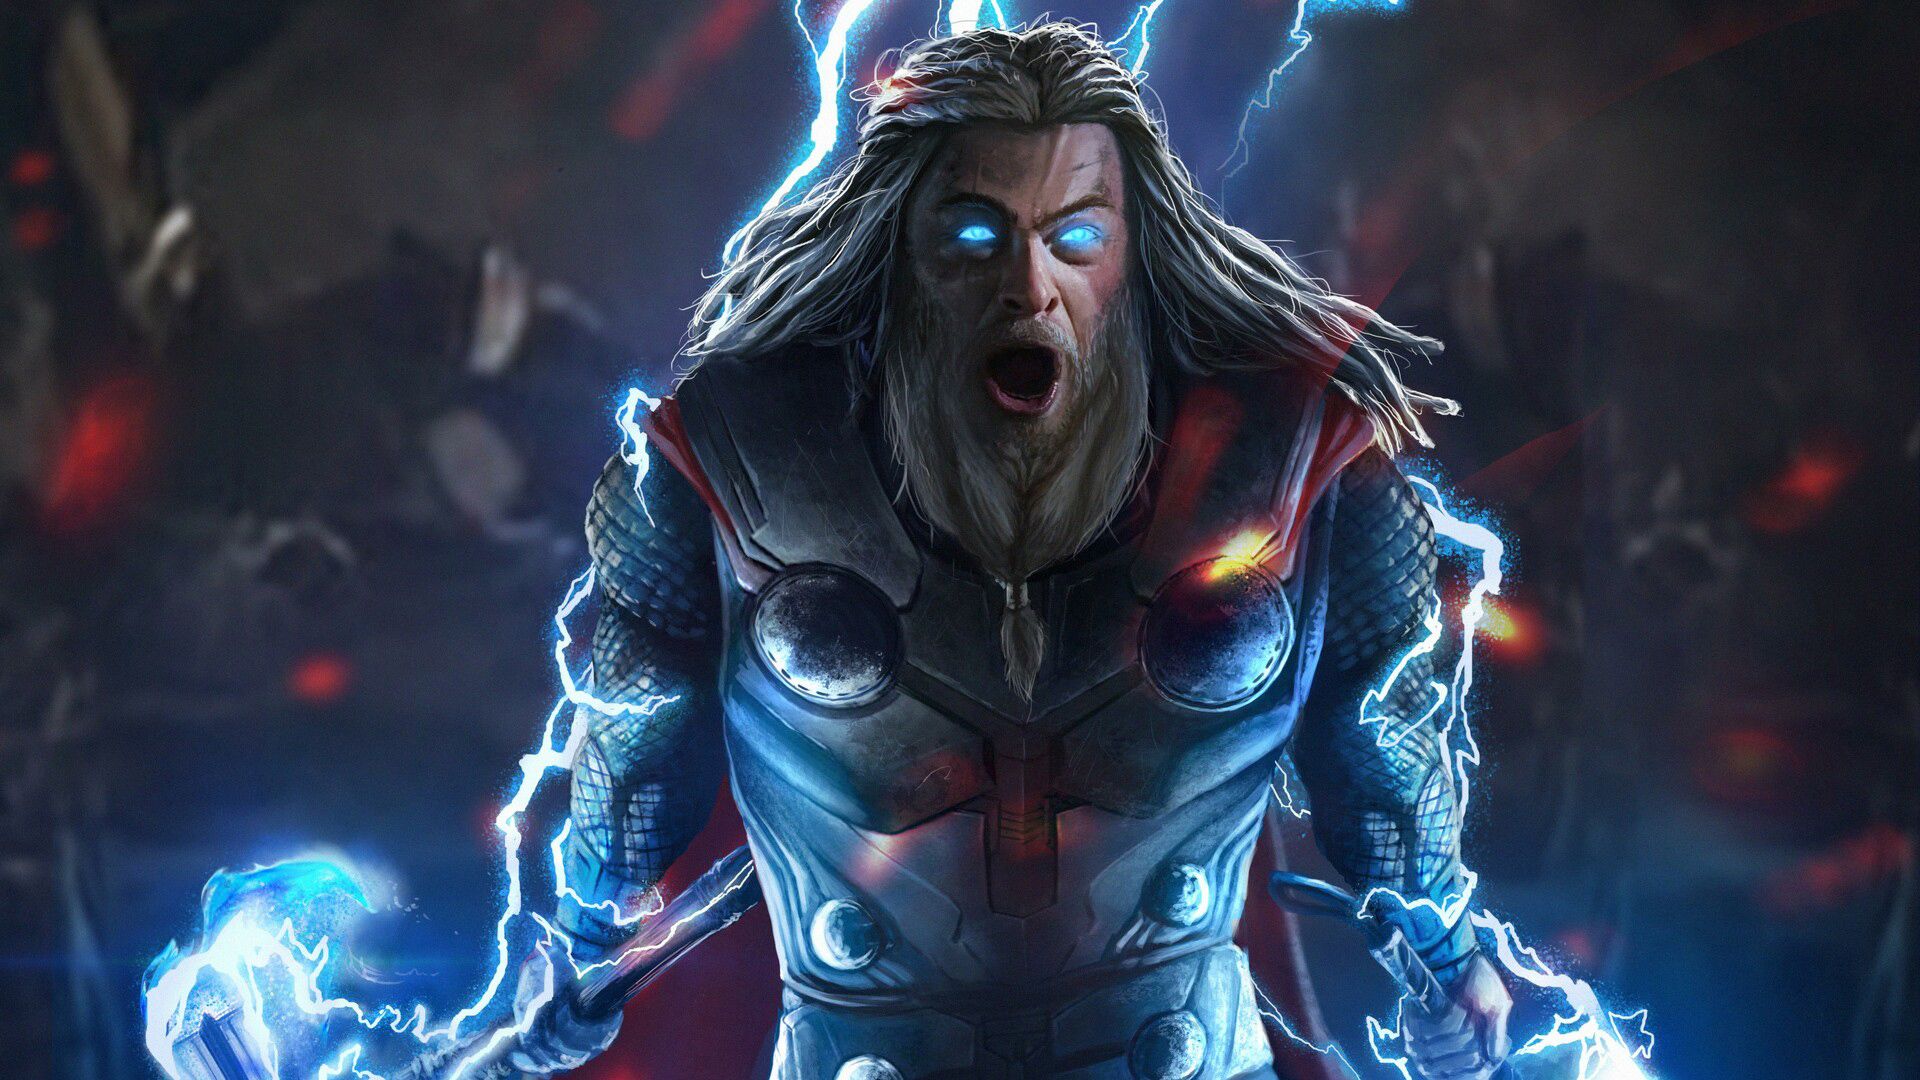 General 1920x1080 Thor Marvel Cinematic Universe fantasy men digital art open mouth blue eyes glowing eyes beard armor hammer blonde cape